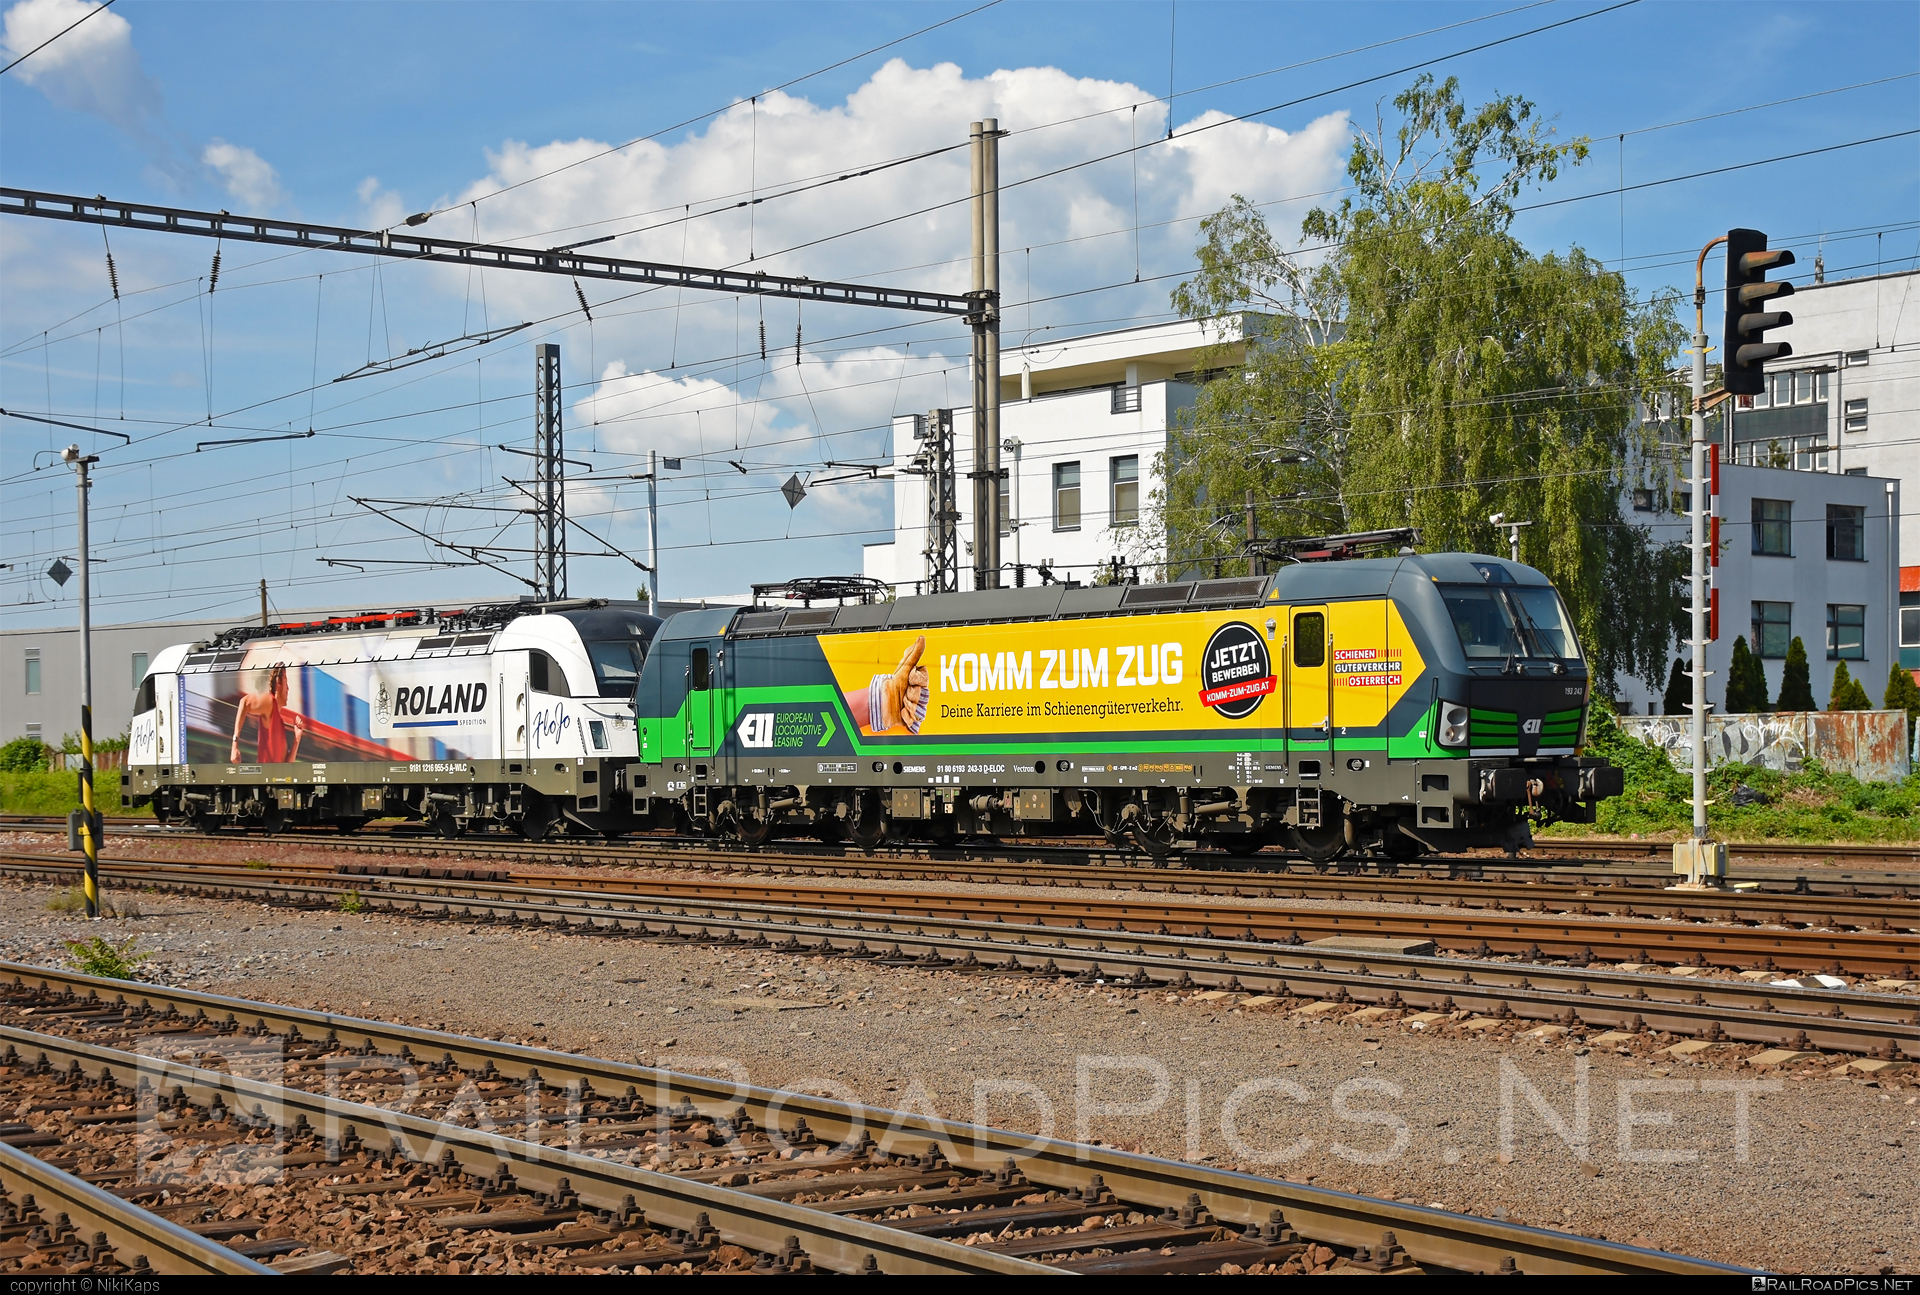 Siemens Vectron AC - 193 243 operated by Wiener Lokalbahnen Cargo GmbH #ell #ellgermany #eloc #europeanlocomotiveleasing #siemens #siemensVectron #siemensVectronAC #vectron #vectronAC #wienerlokalbahnencargo #wienerlokalbahnencargogmbh #wlc